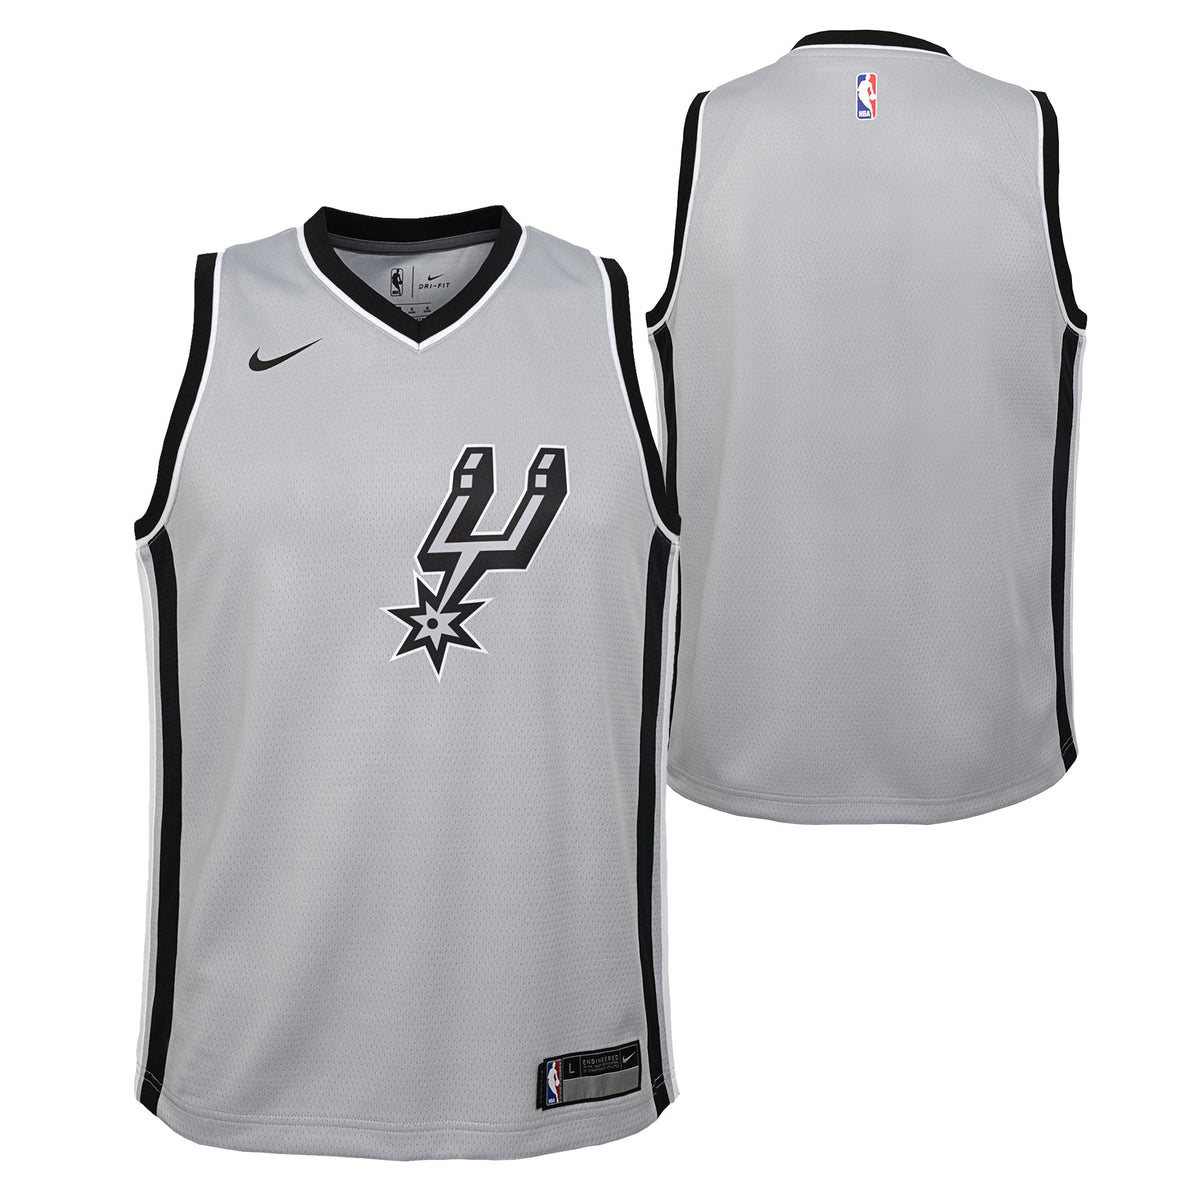 Nike NBA Youth (8-20) San Antonio Spurs Practice Long Sleeve T-Shirt